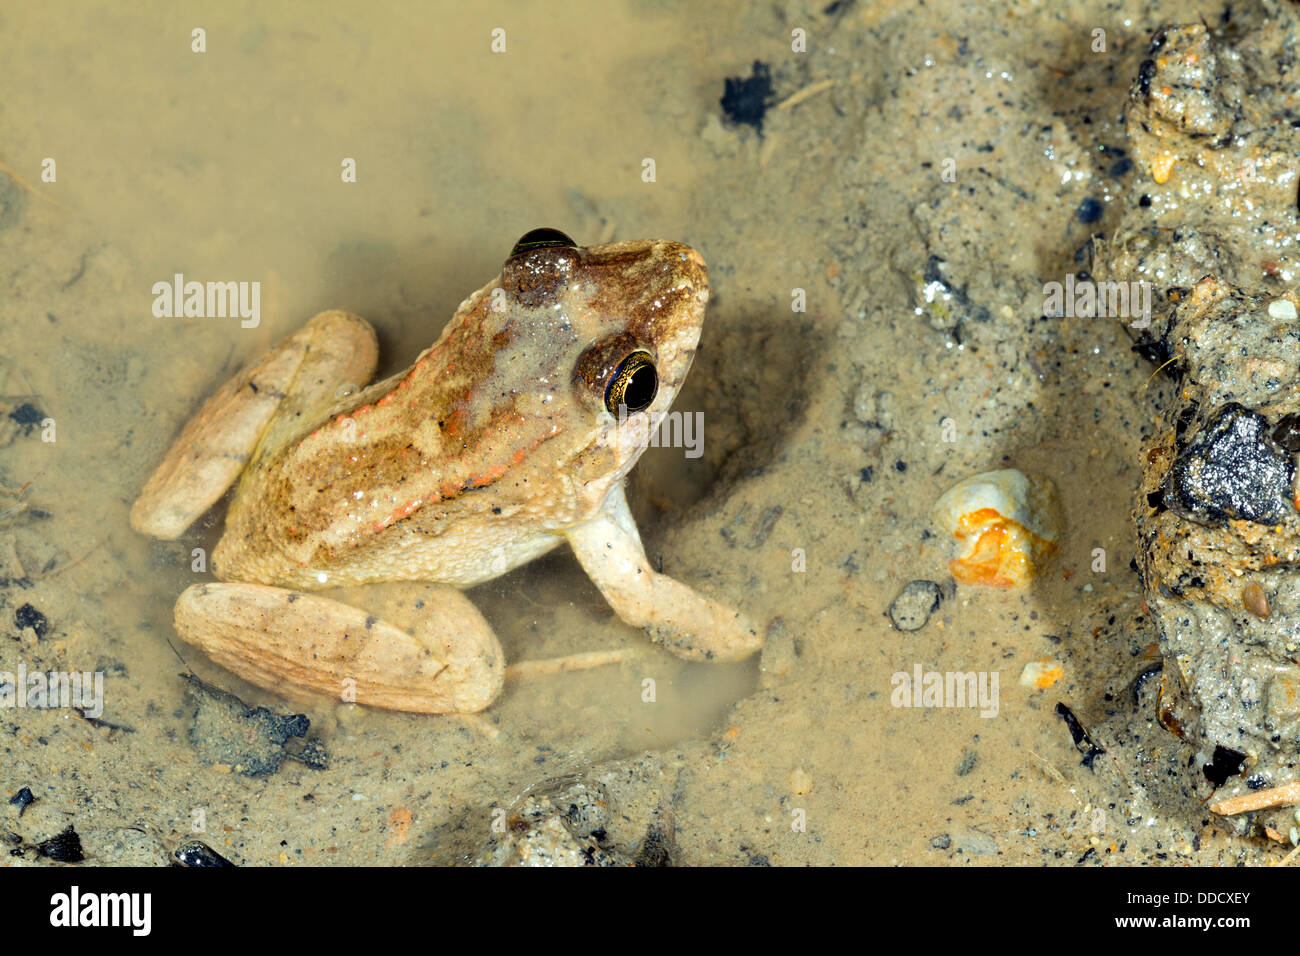 Selva enano sapo (Leptodactylus wagneri) en un charco lodoso, Ecuador Foto de stock